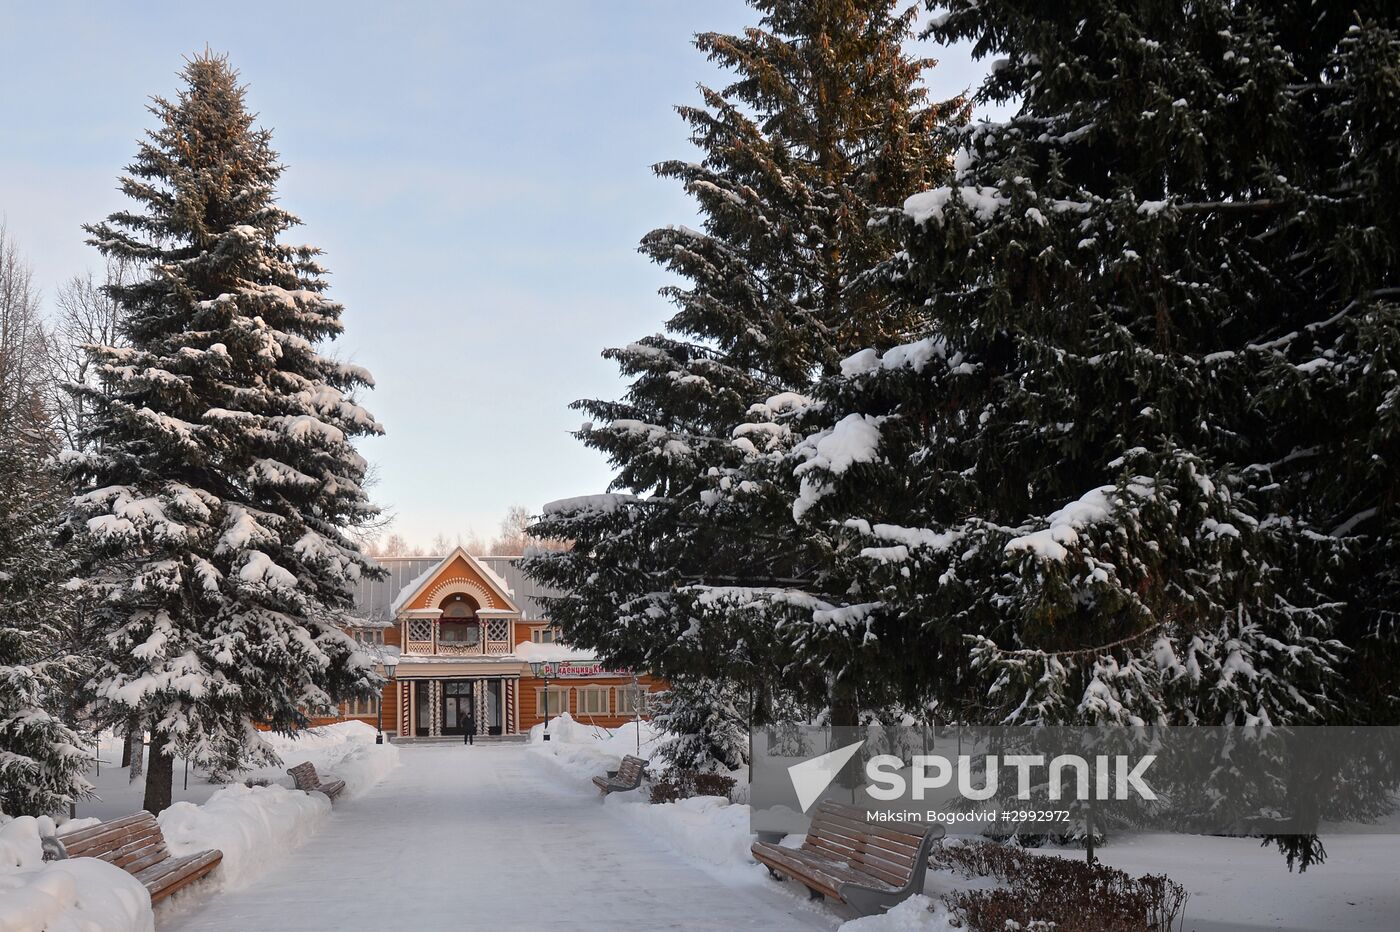 Qysh Babai and Kar Kyzy residence in Tatarstan